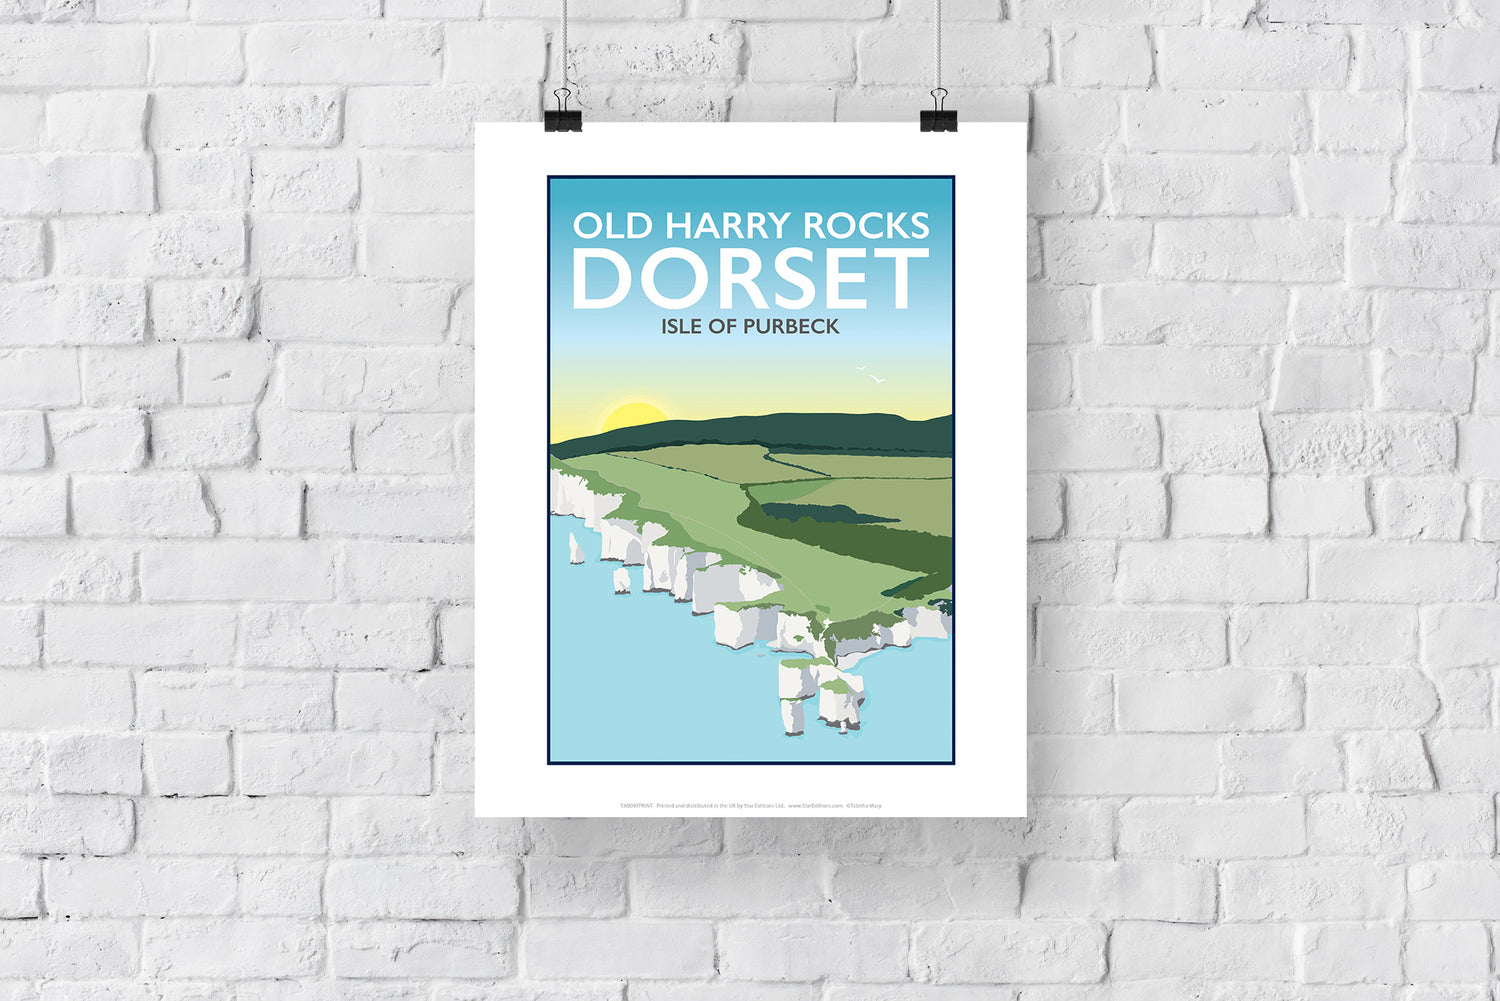 Old Harry Rocks, Dorset - Art Print